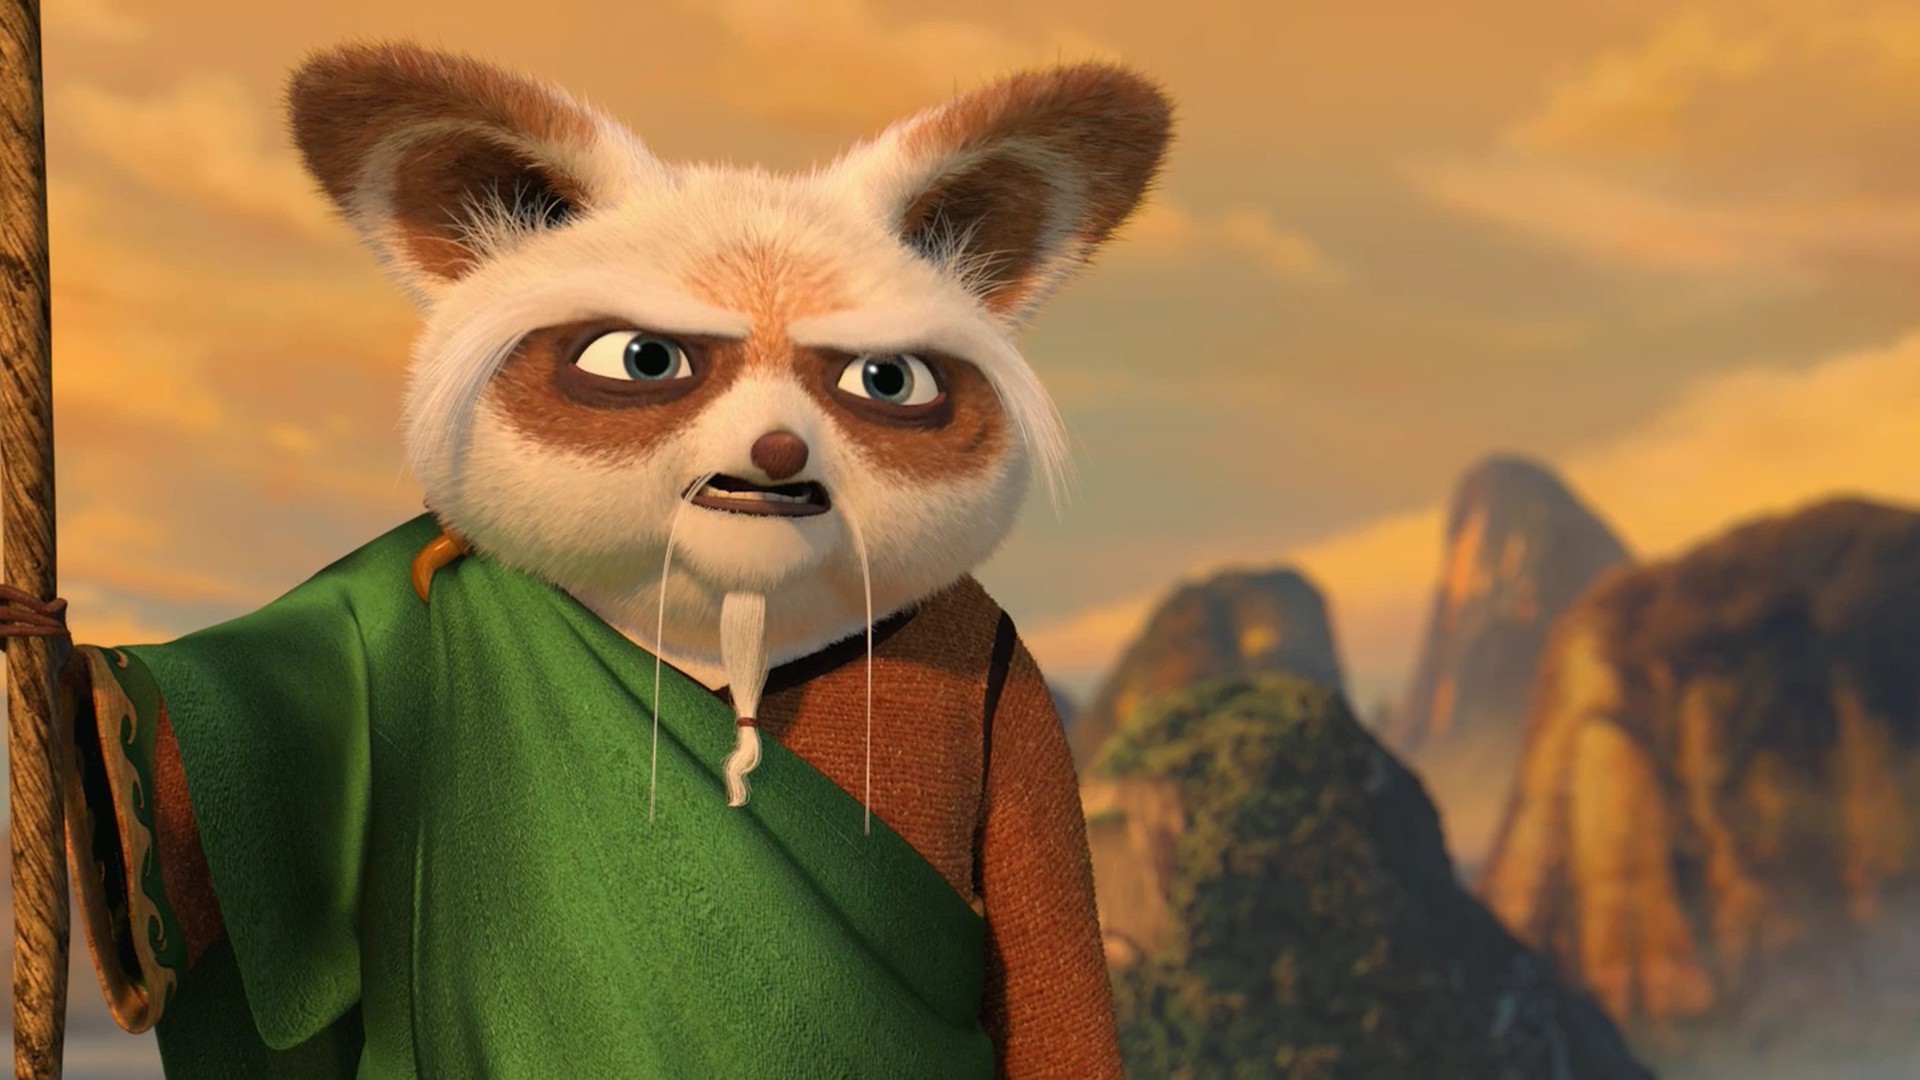 kung fu panda 3 watch online free full movie hd